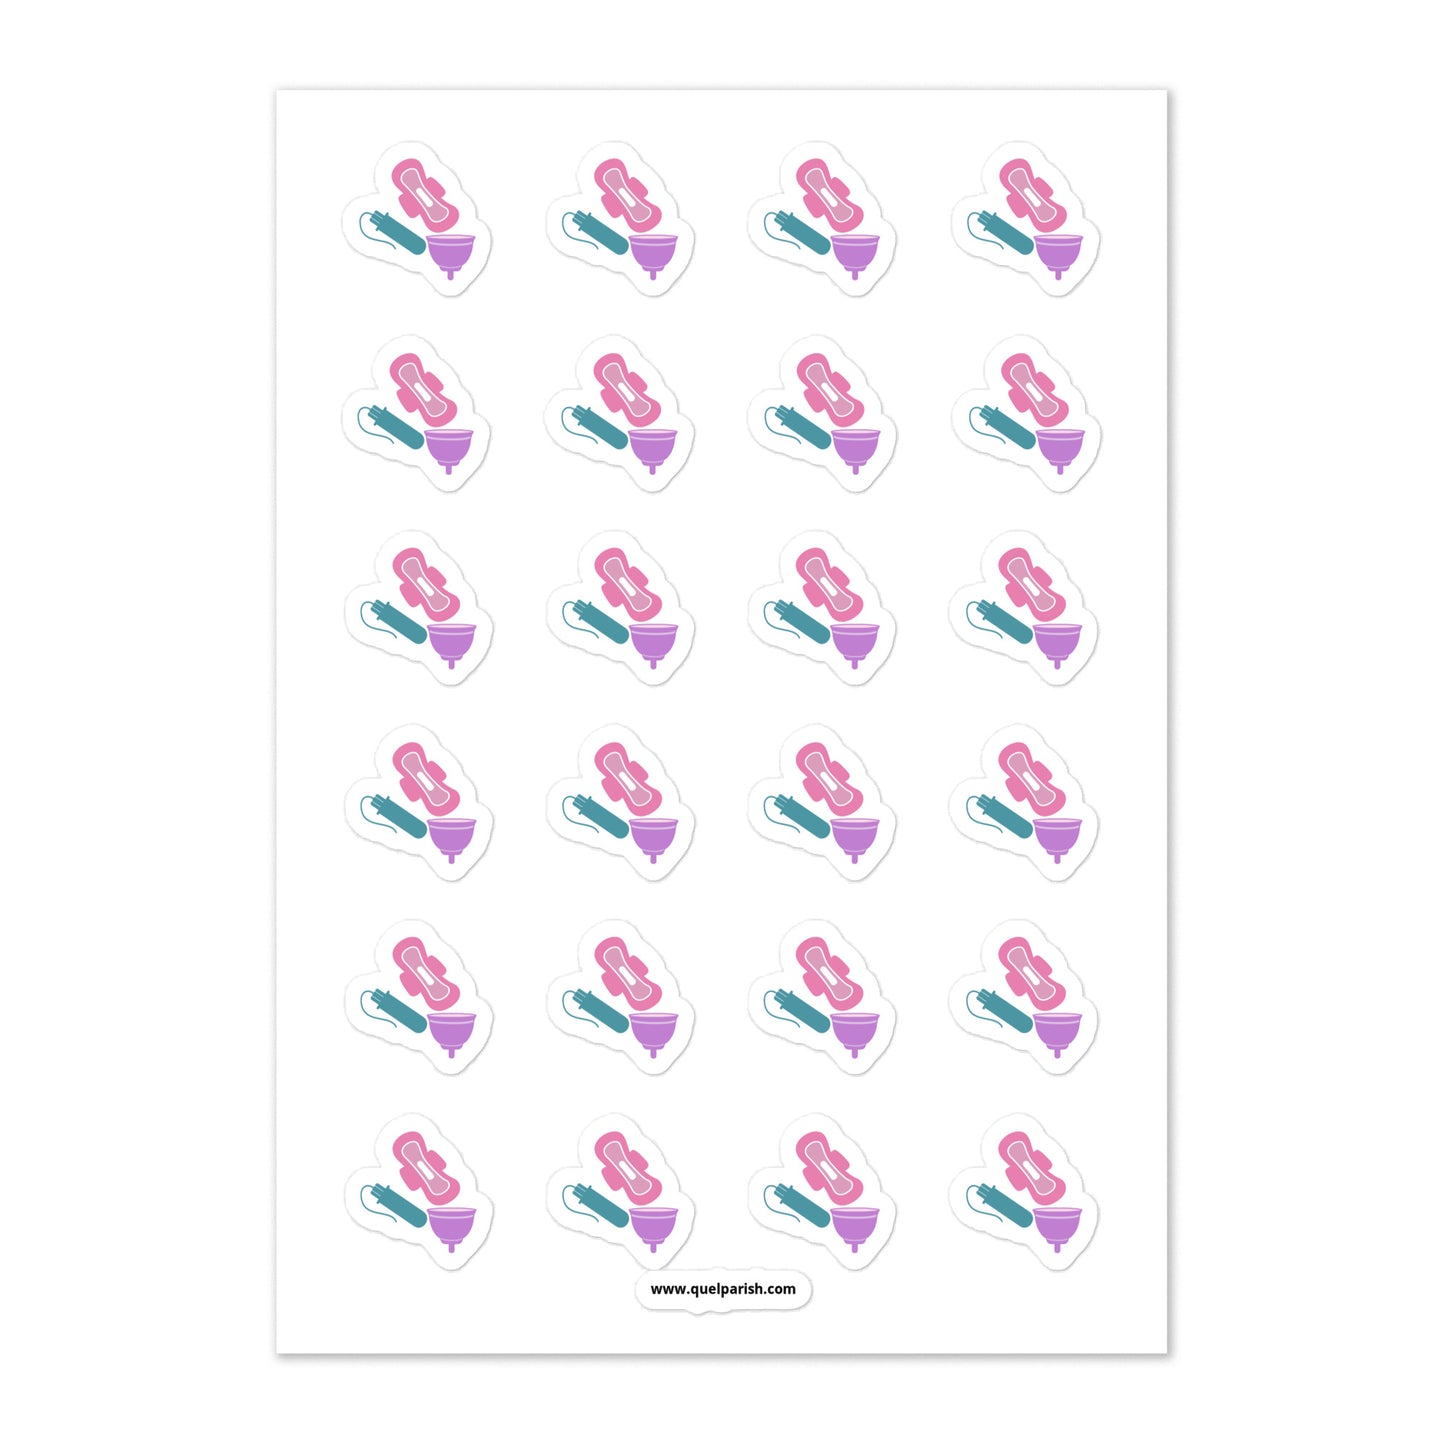 Feminine Hygiene Period Products Sticker Sheet